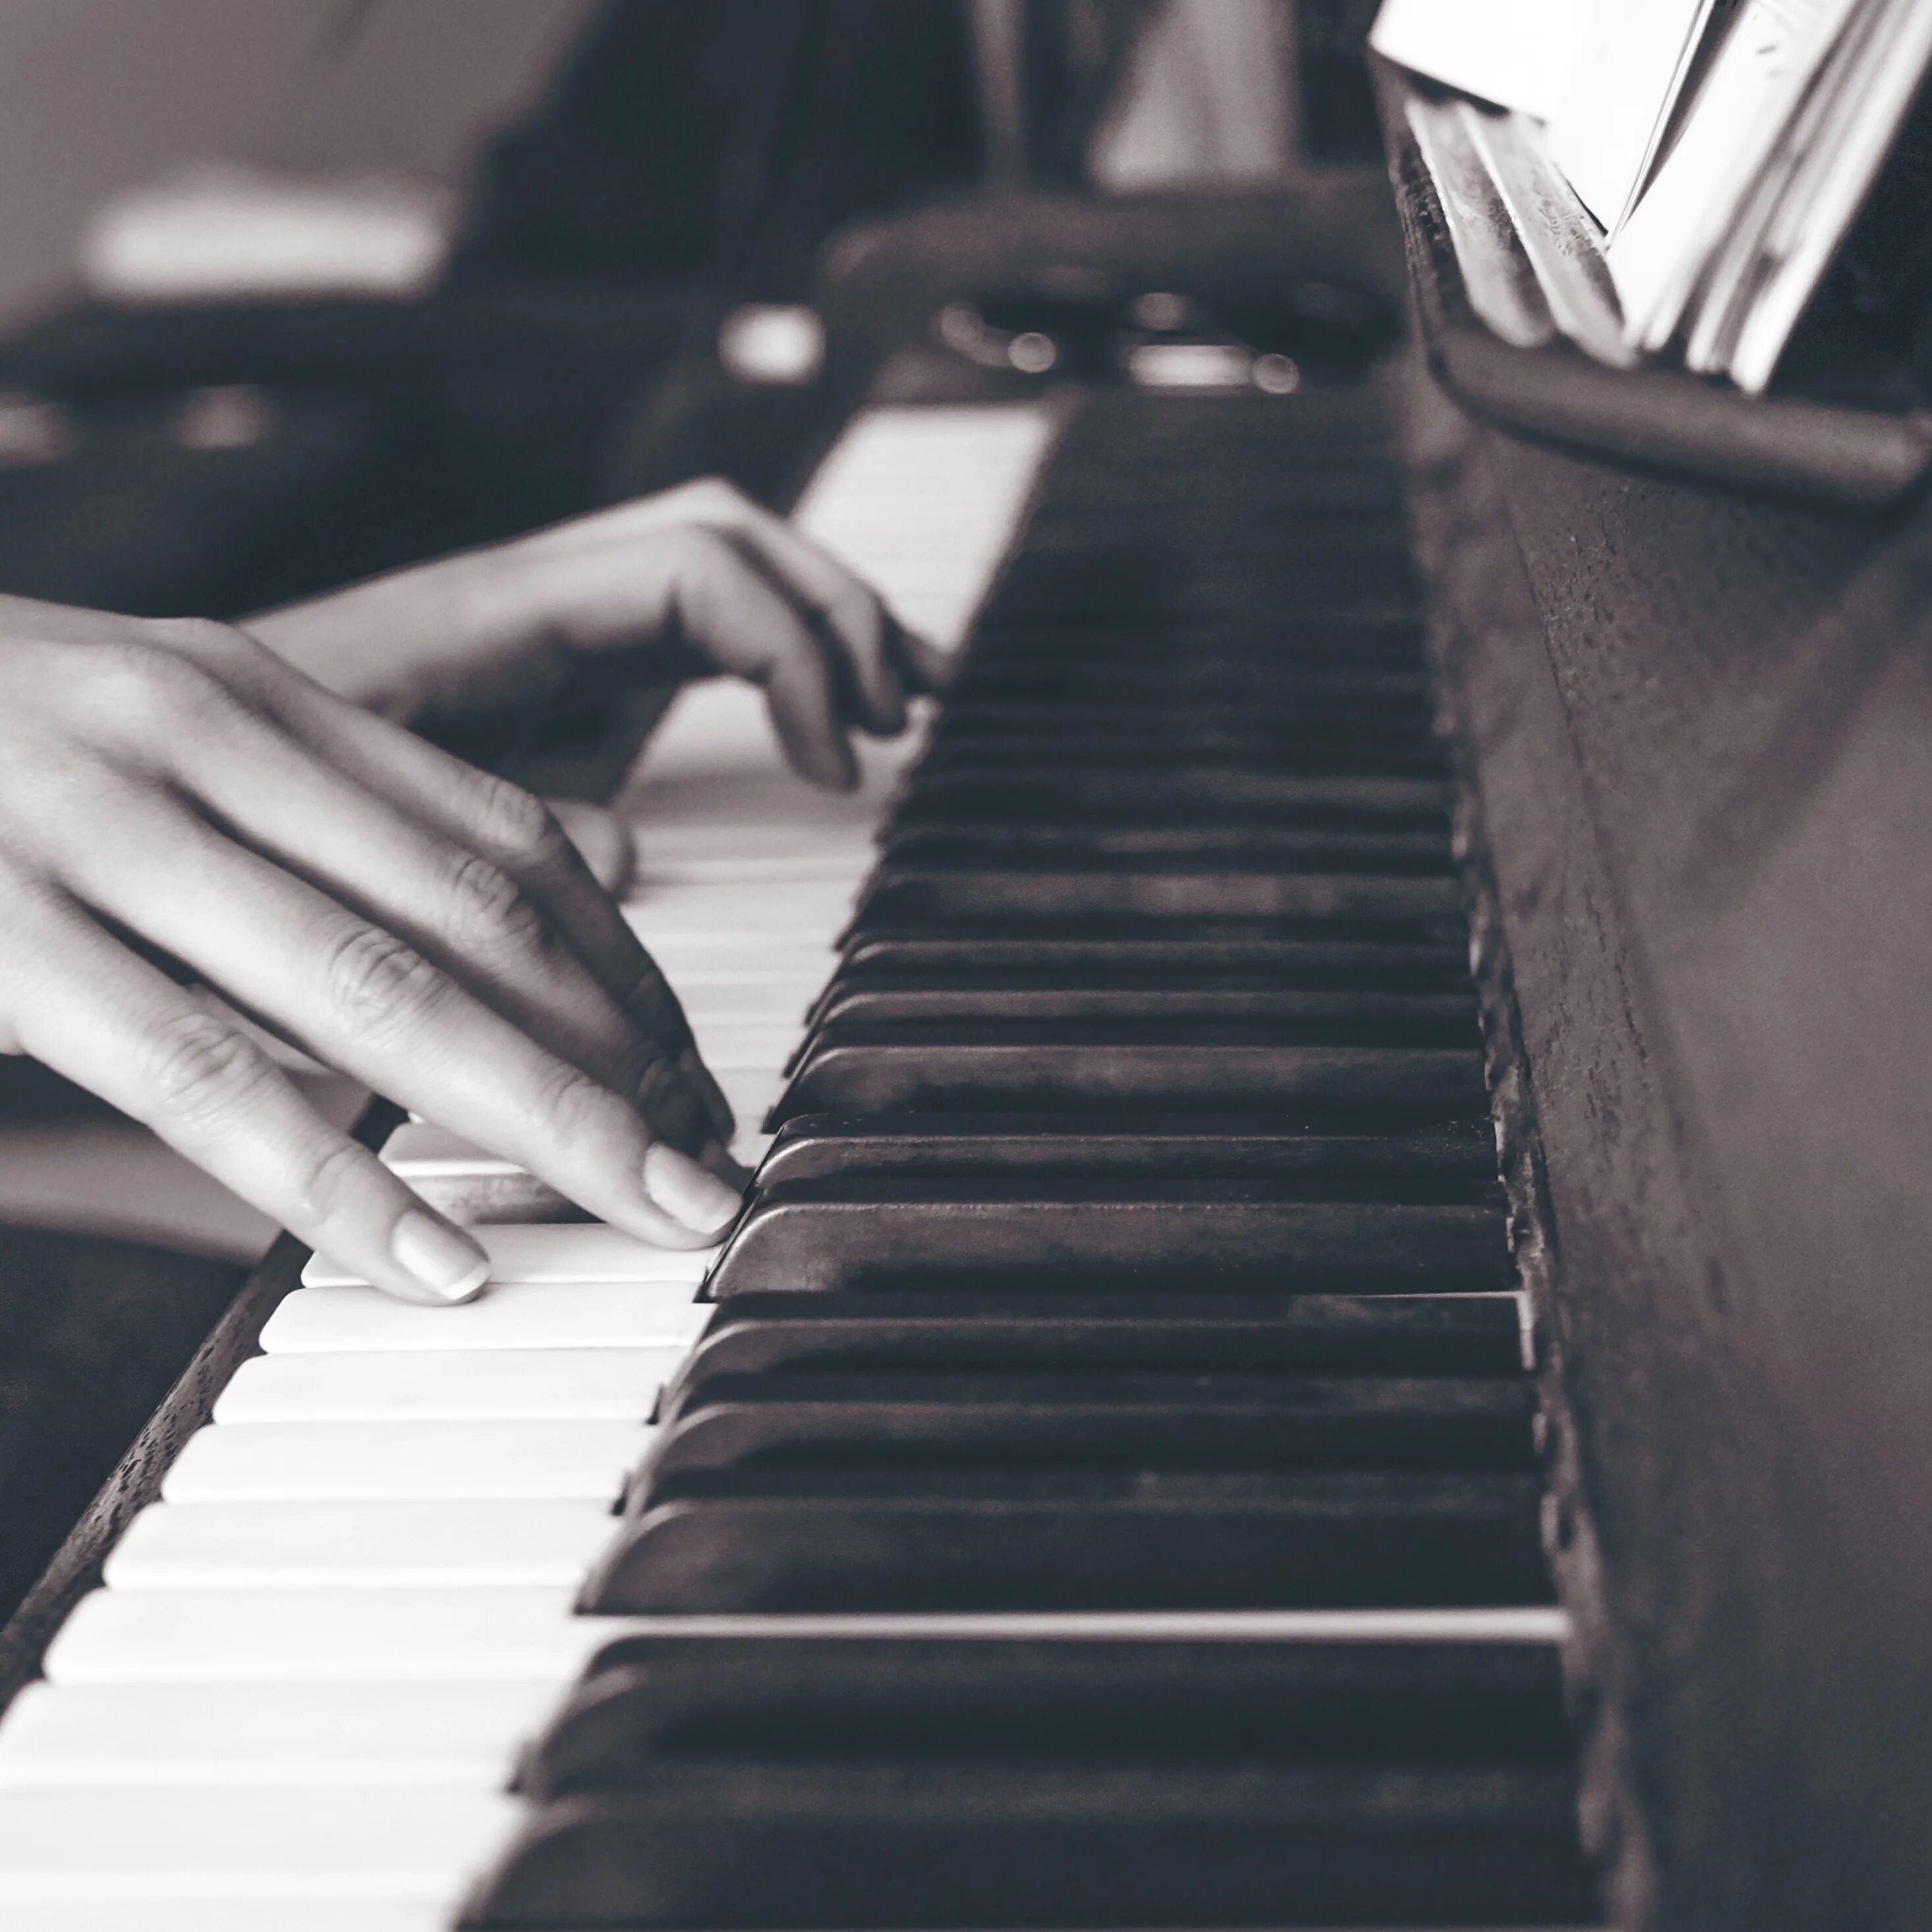 Песни на фортепиано слушать. Руки на пианино. Игра на фортепиано. Руки на рояле. Пианино Эстетика.